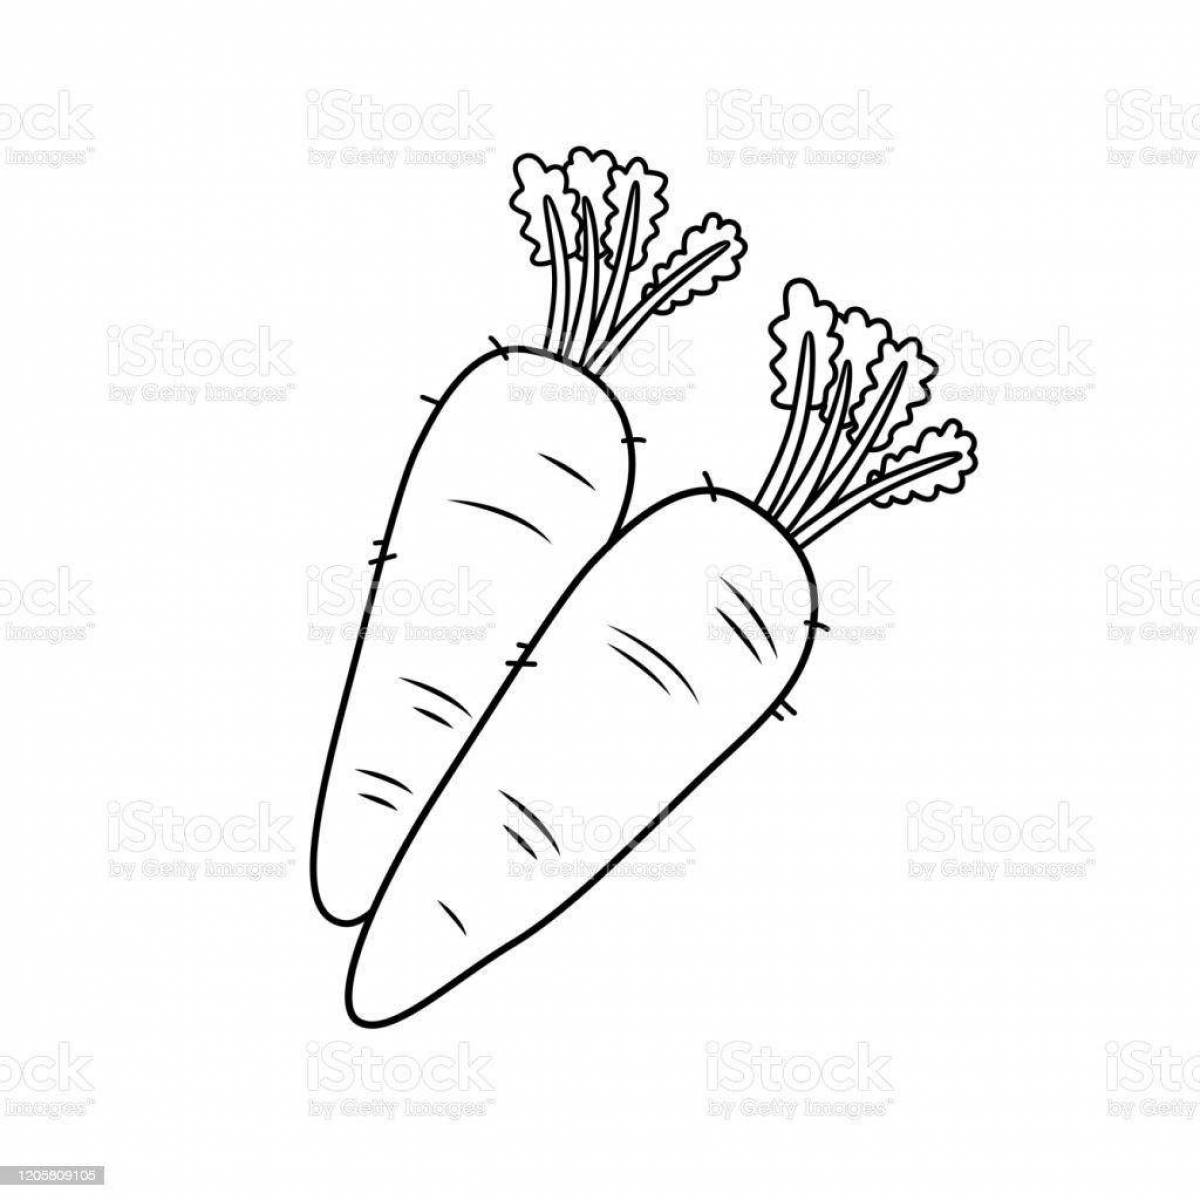 Яркая морковная раскраска для малышей 2-3 лет